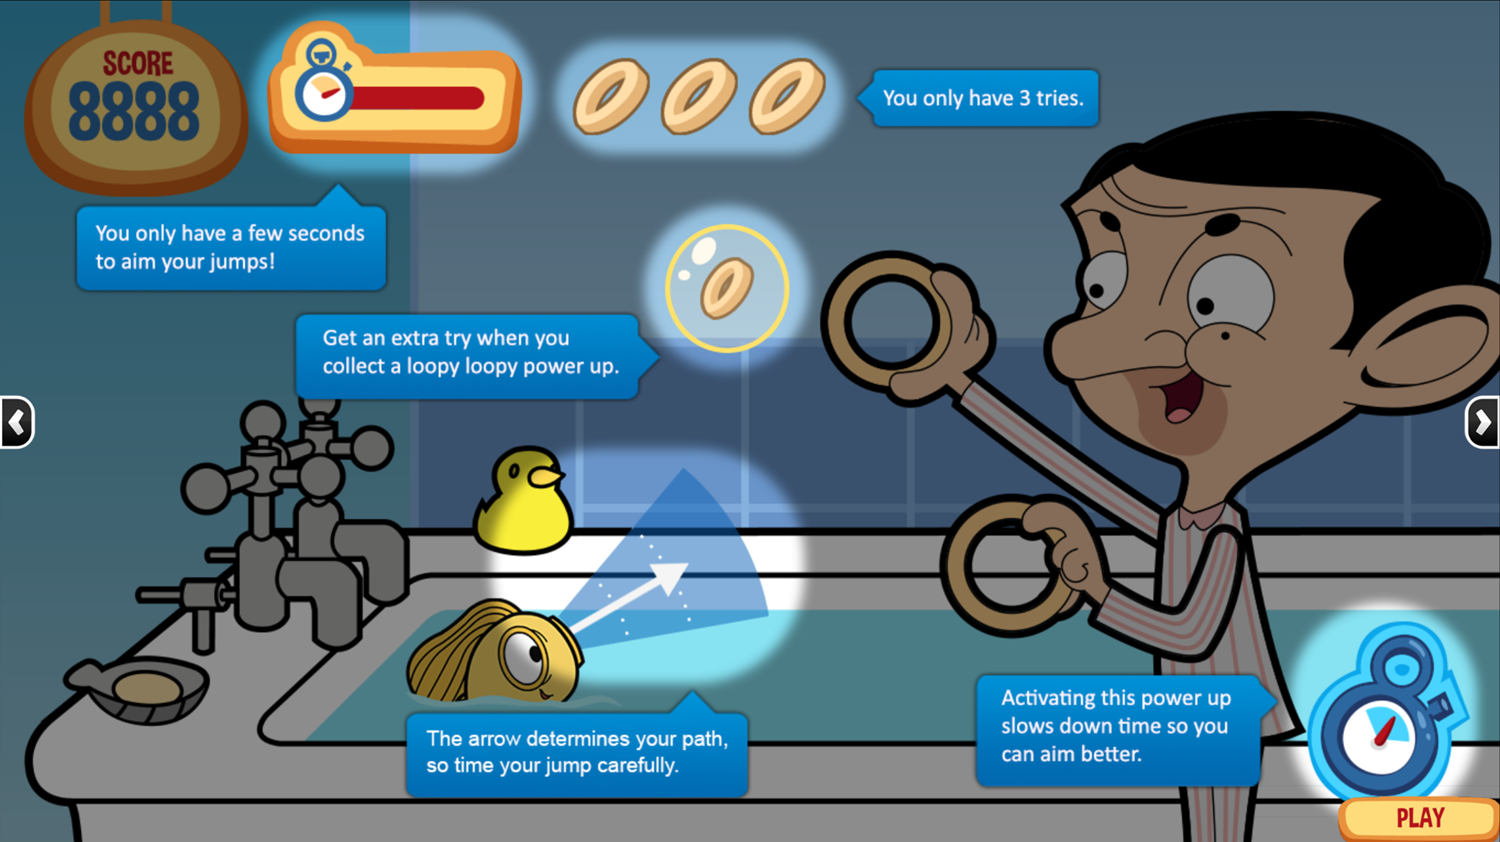 Mr. Bean Goldfish Loopy Loopy Game Instructions Screenshot.